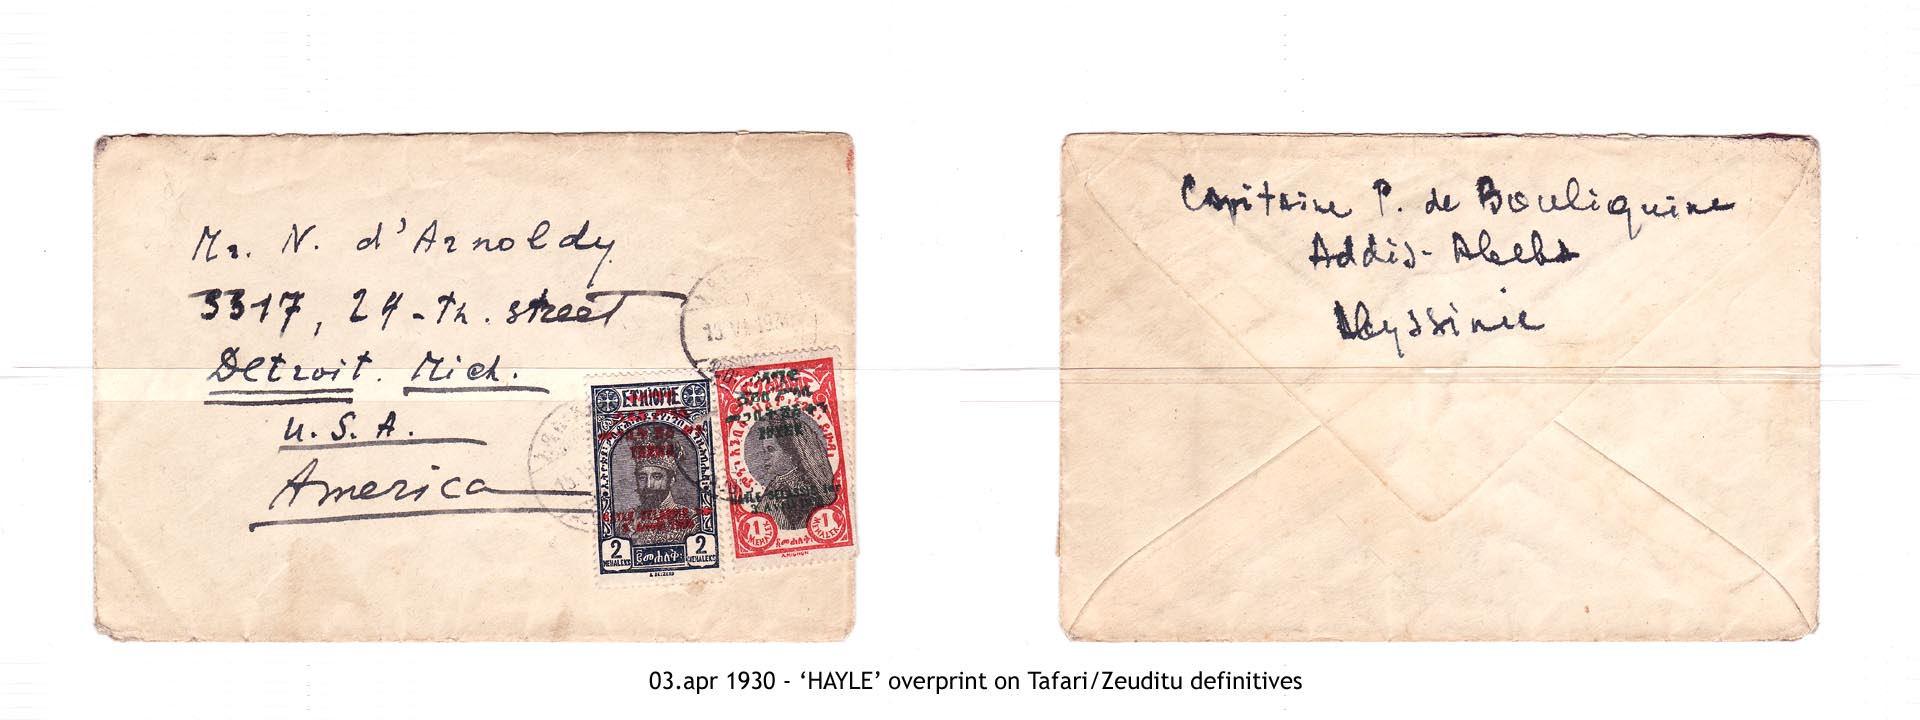 19300403 - ‘HAYLE’ overprint on Tafari-Zeuditu definitives